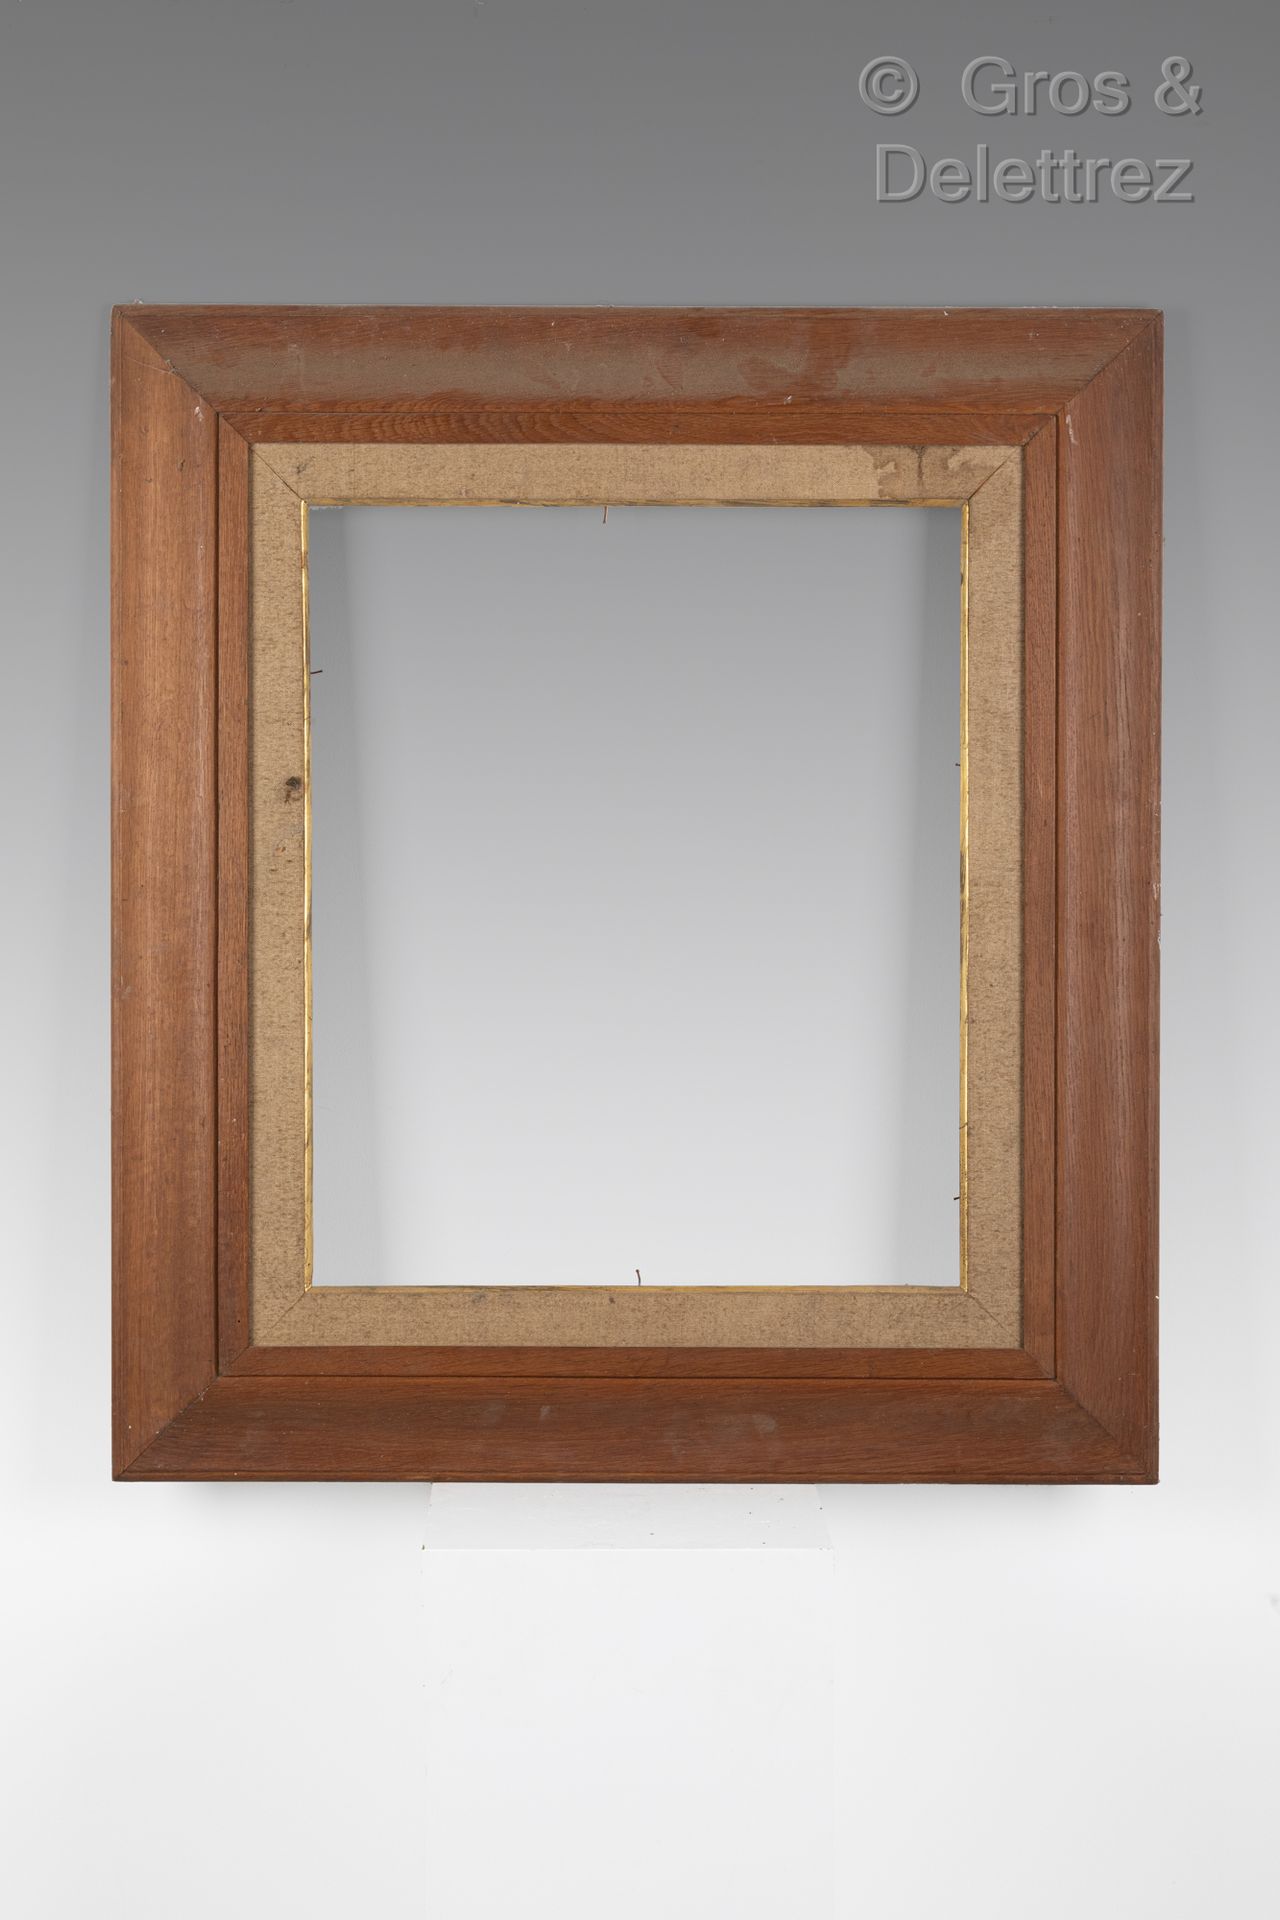 Null Upside down frame in moulded walnut

Circa 1920

60 x 69,7 x 10,5 cm. 20F